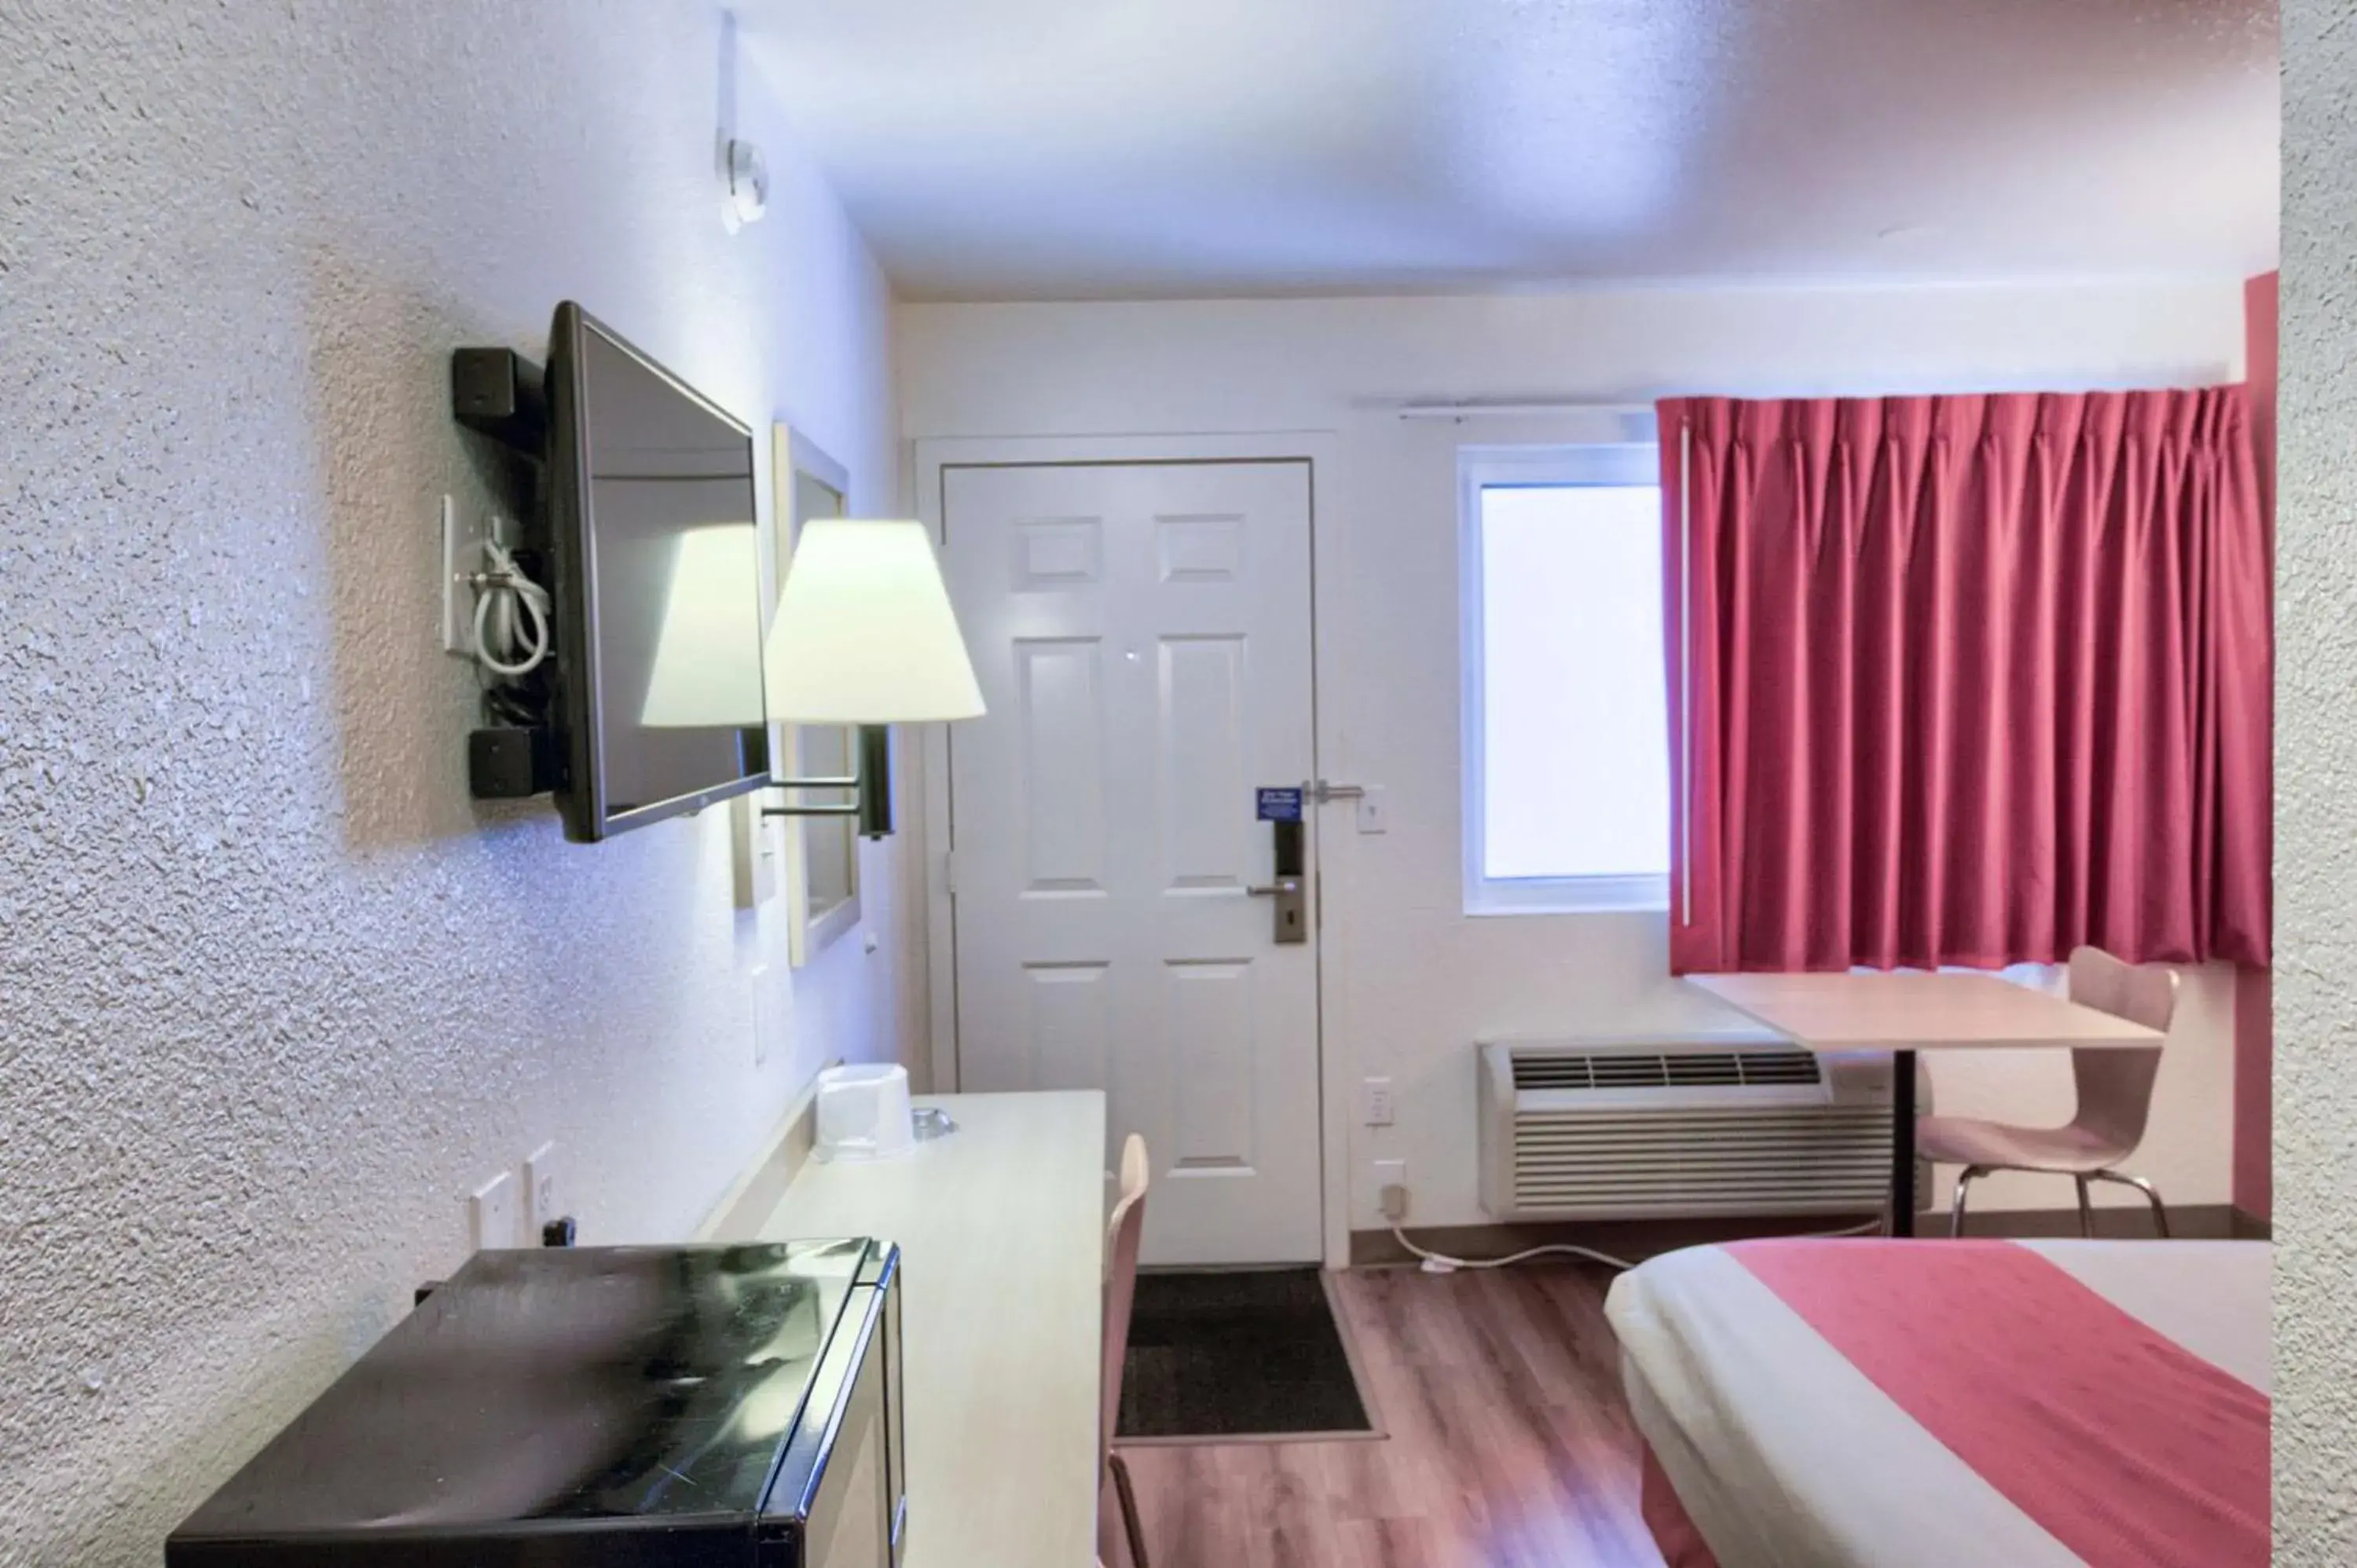 Deluxe Queen Room - single occupancy in Motel 6-Everett, WA - North